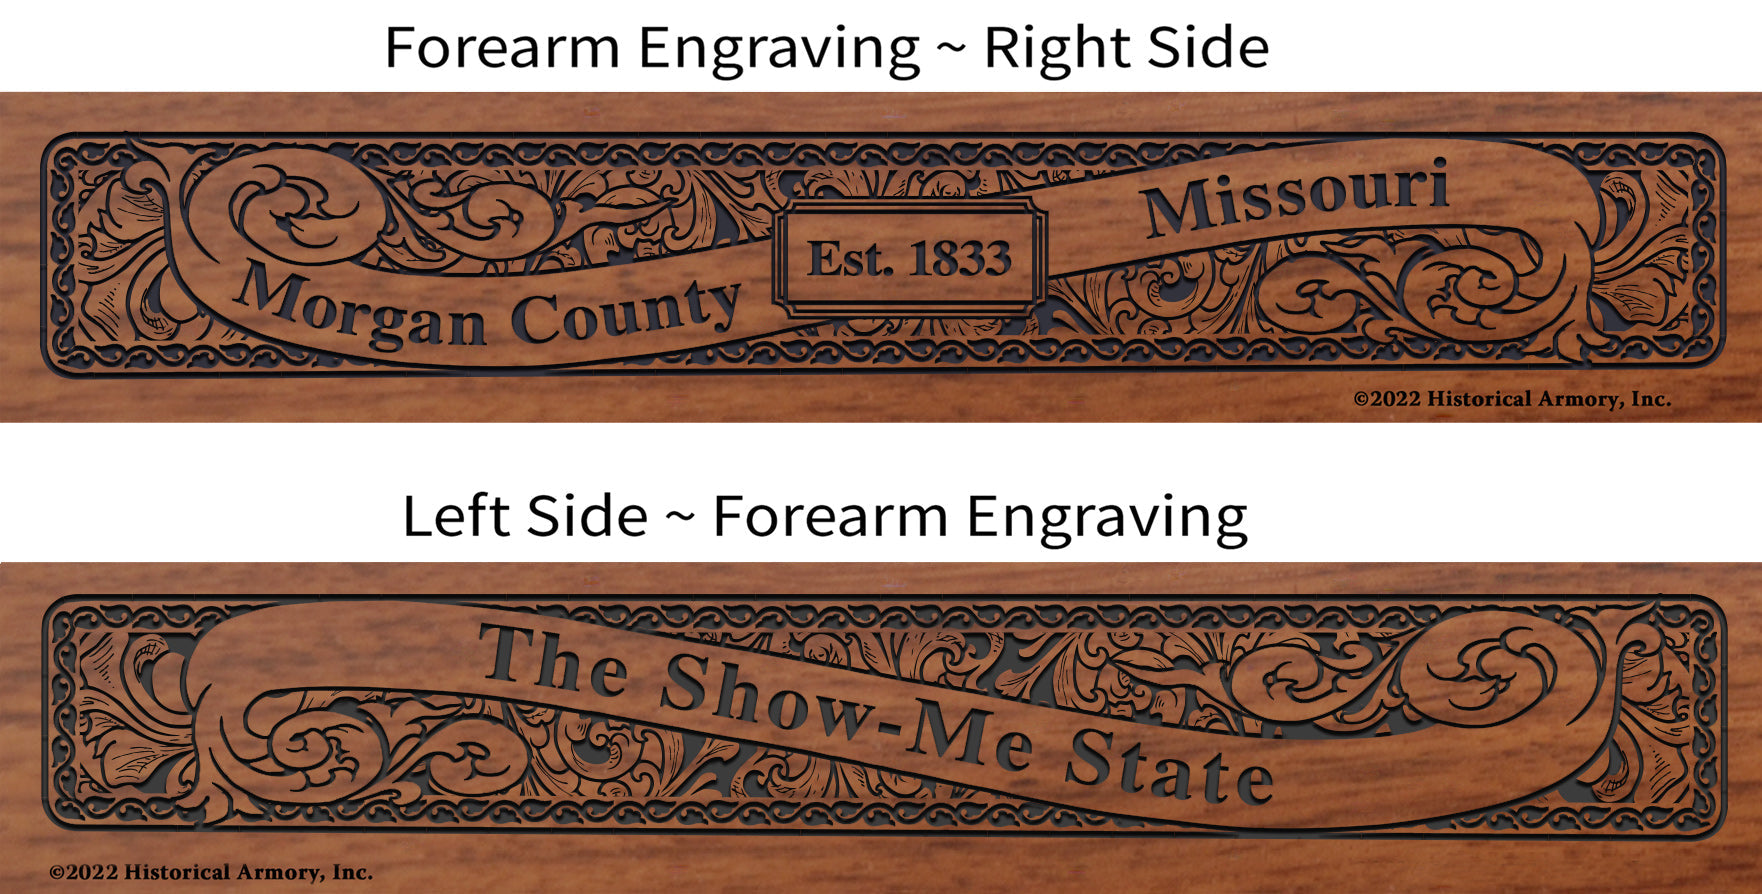 Morgan County Missouri Engraved Rifle Forearm